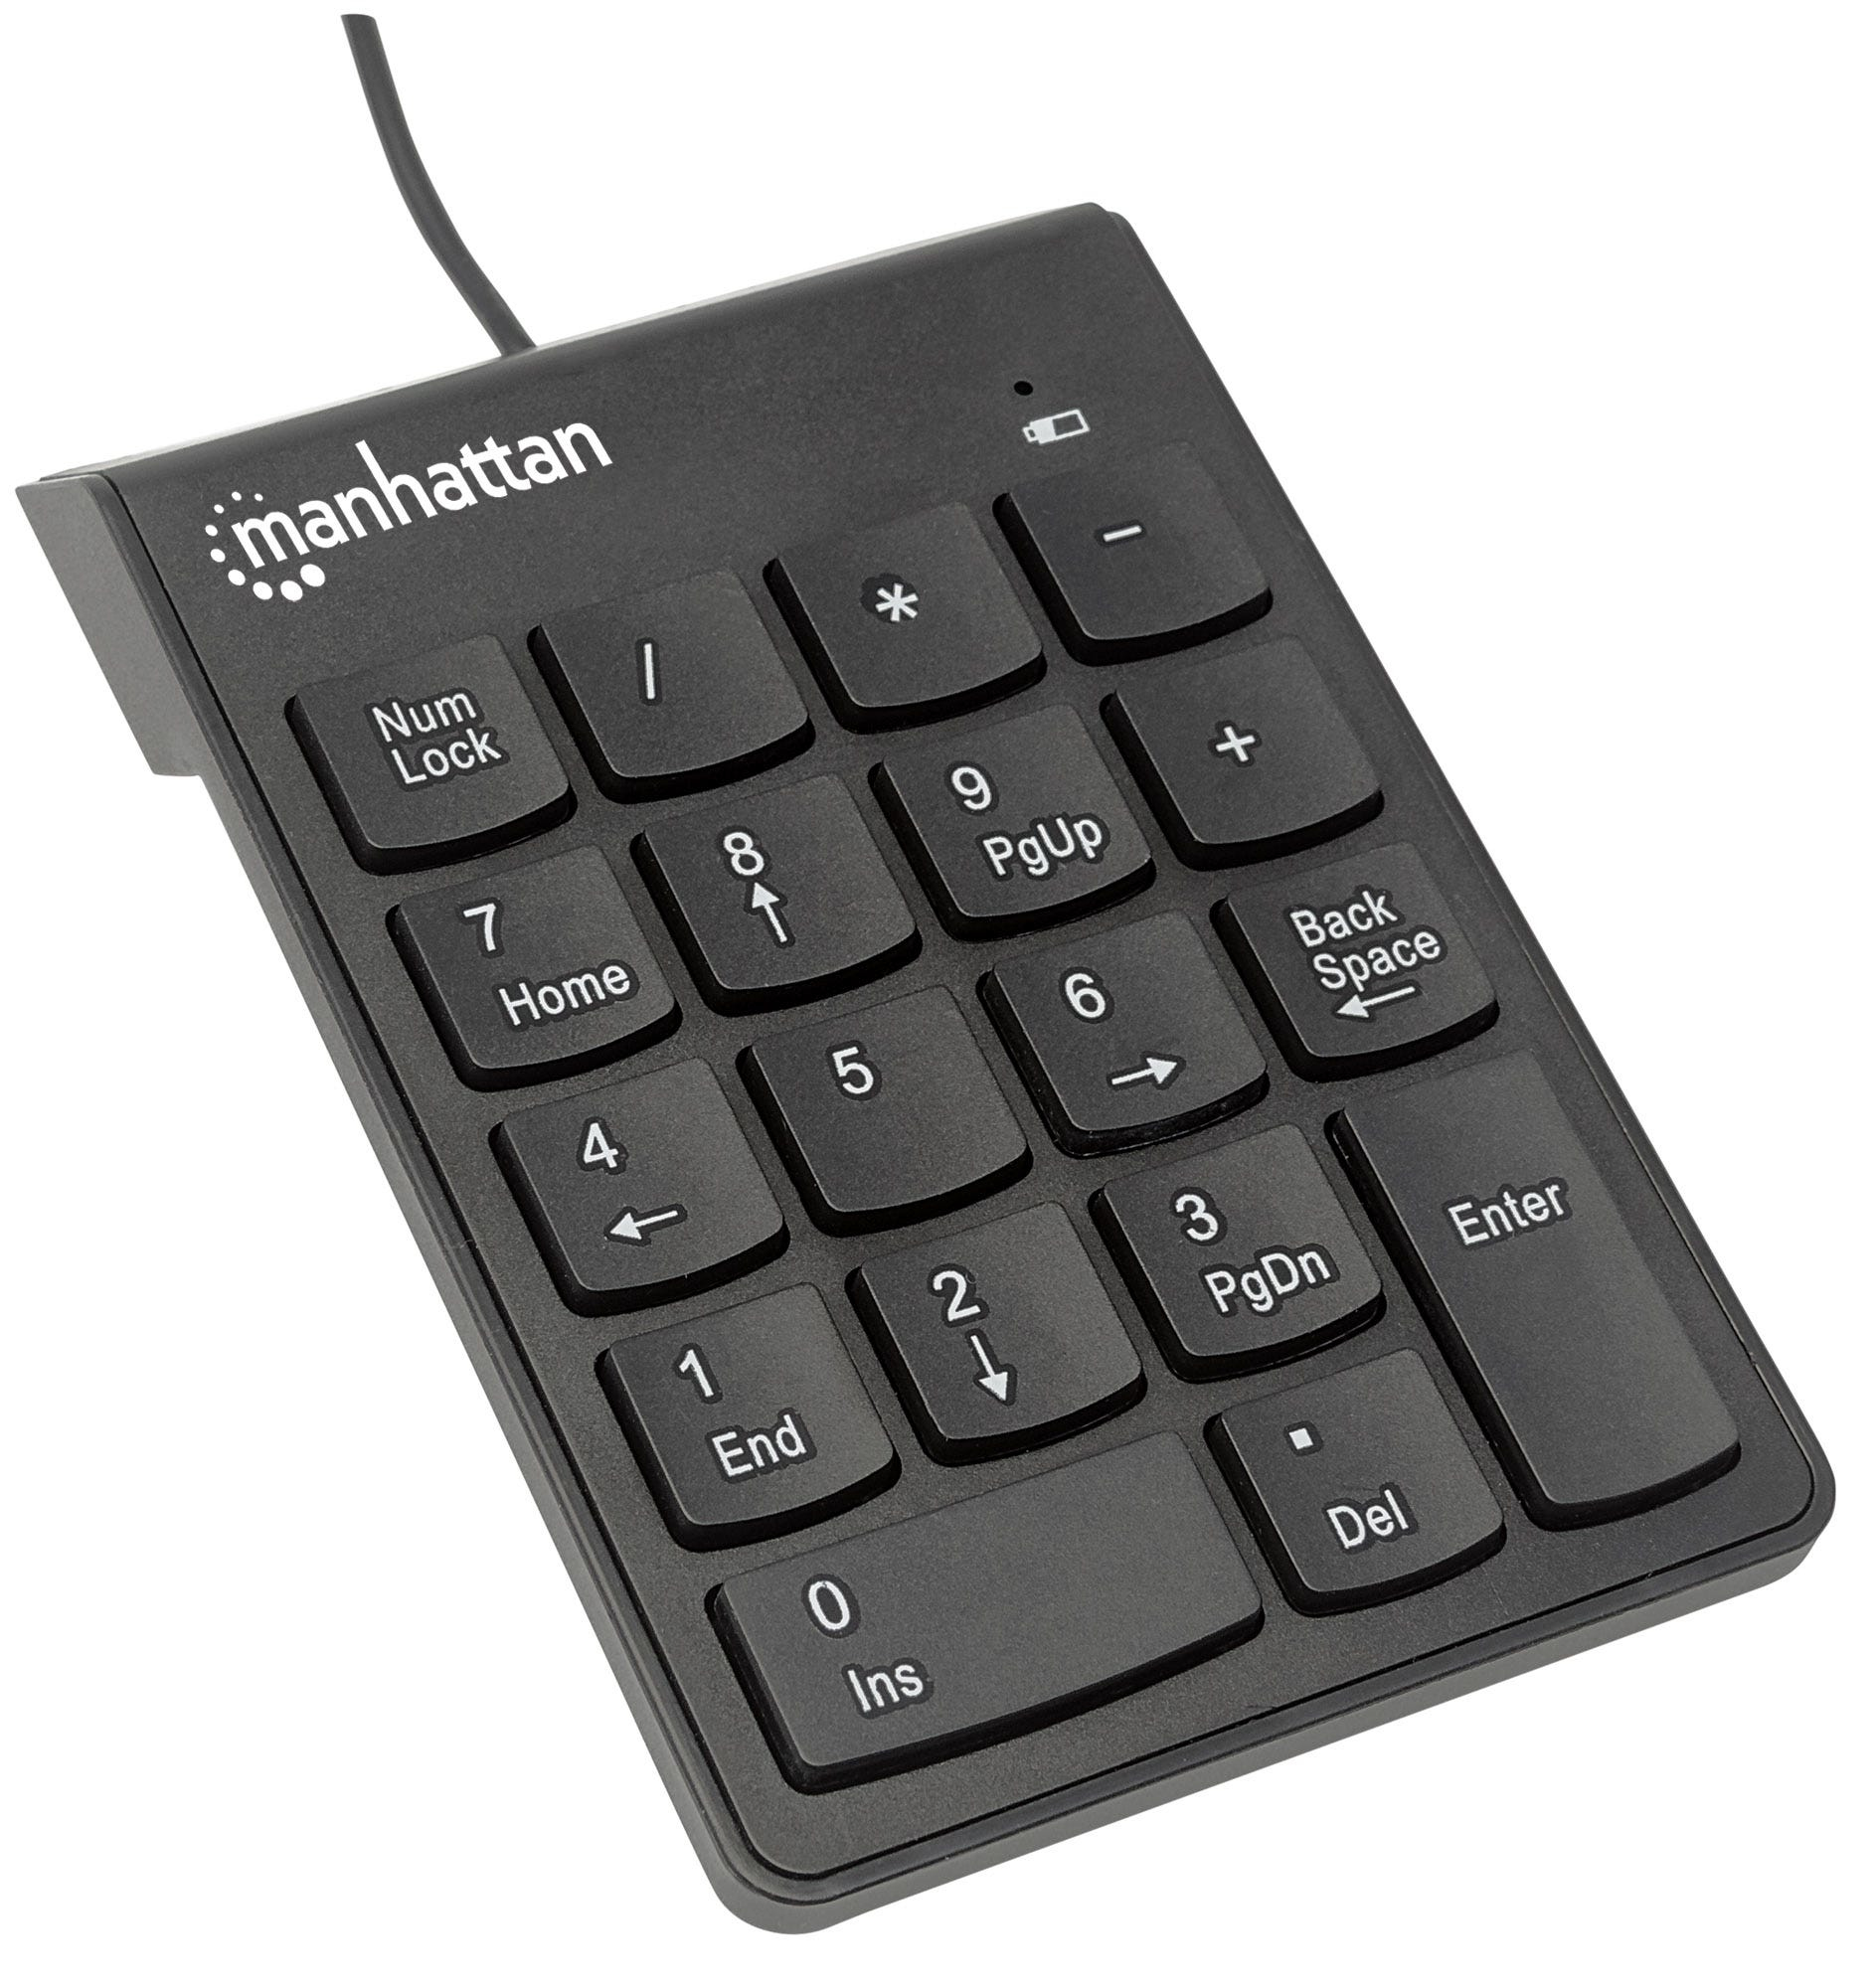 Manhattan Numeric Keypad, Wired, USB, Windows or Mac, 18 full size keys, Black, Blister